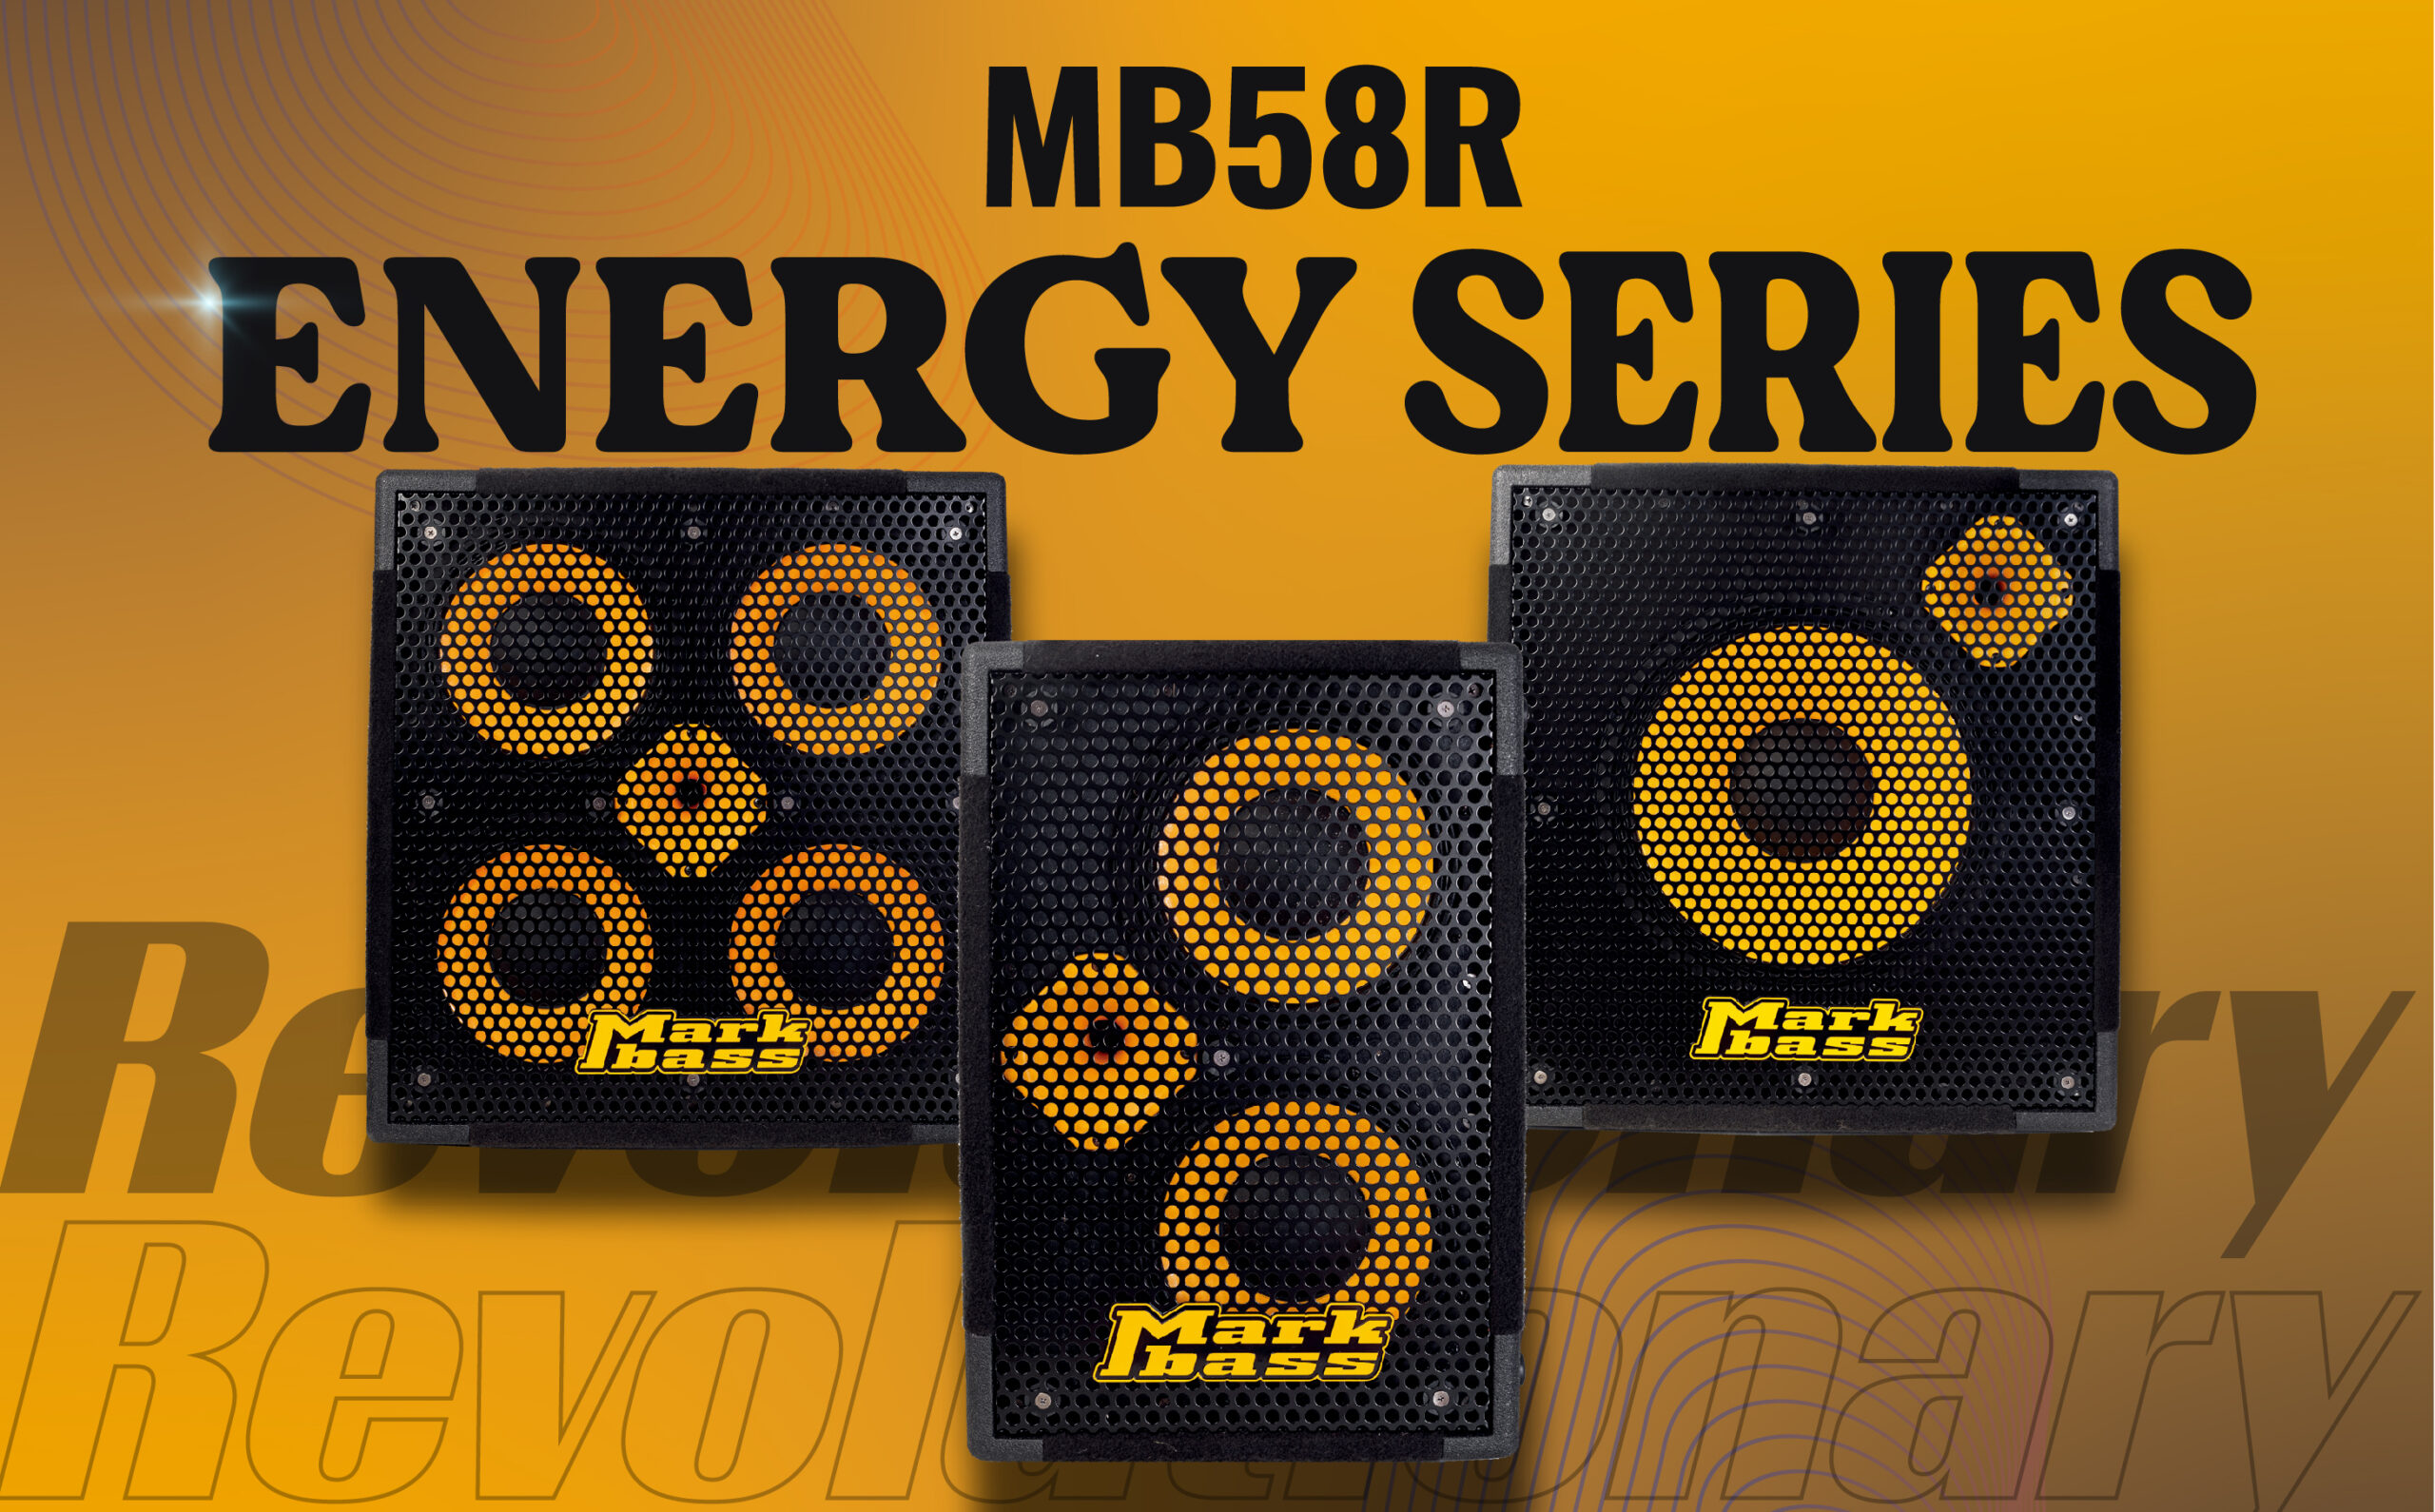 MB58R ENERGY SERIES